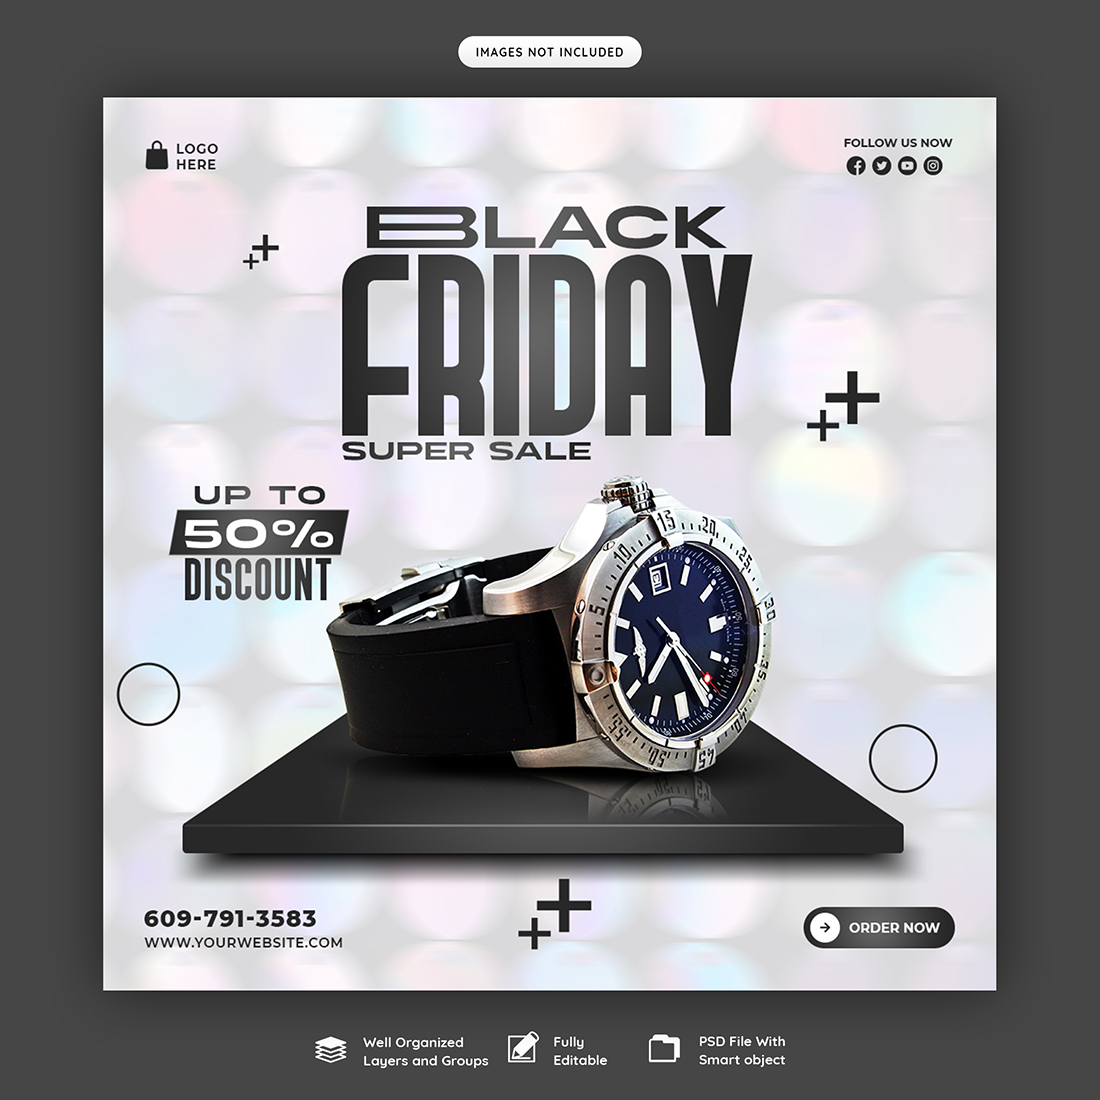 Black Friday Social Media Design preview image.